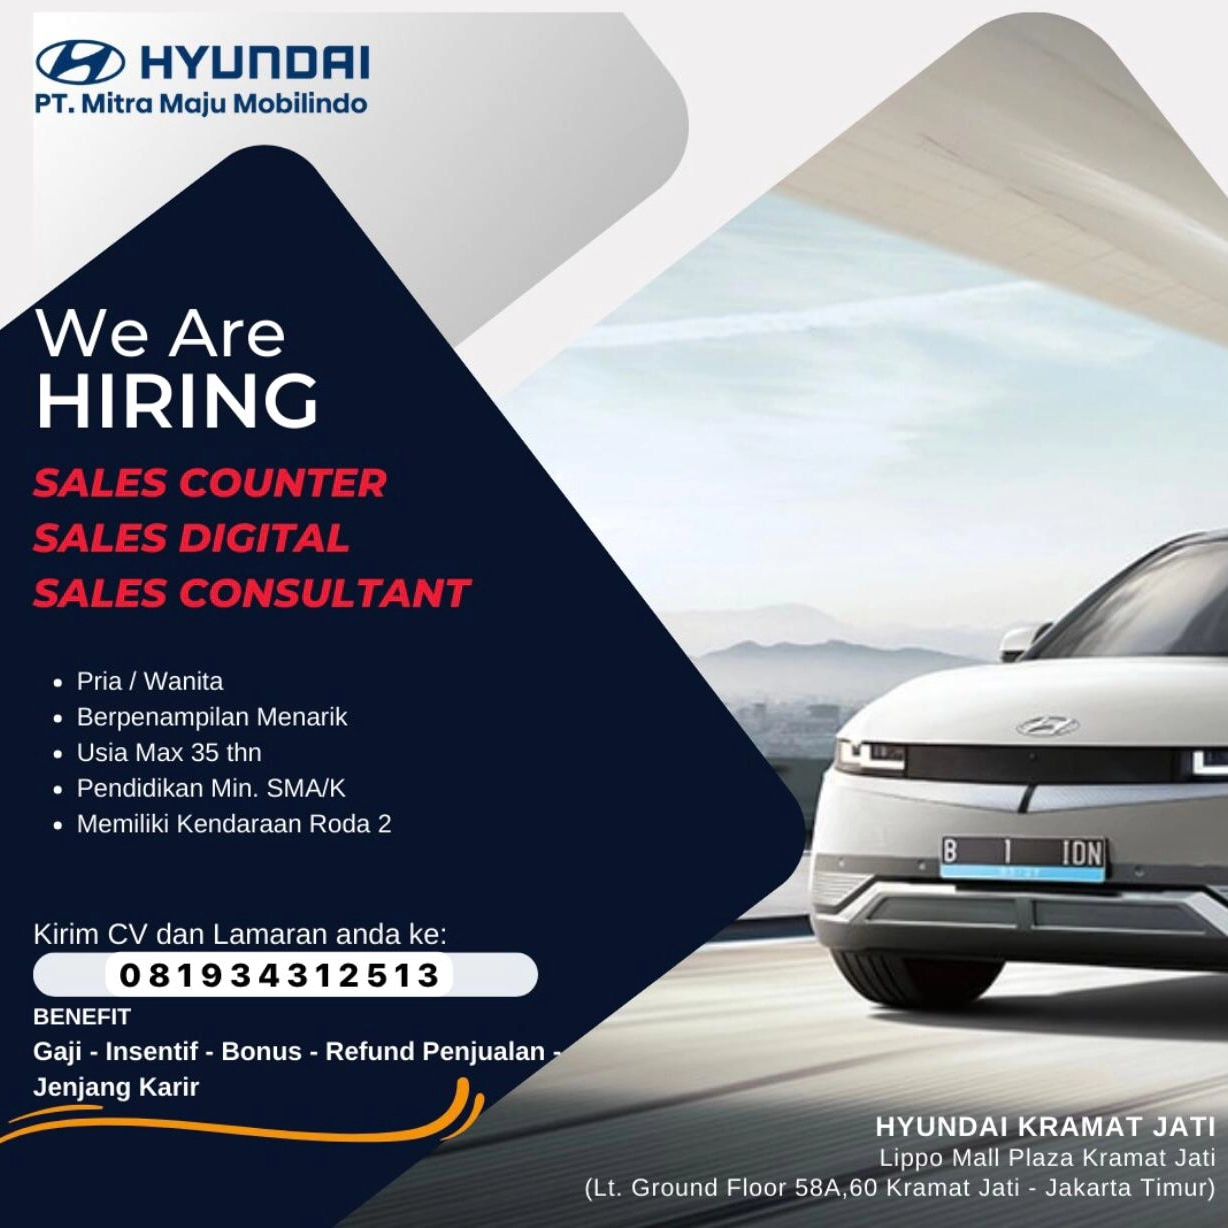 Hyundai PT. Mitra Maju Mobilindo – Professional Sales Consultant  Sales Digital  Sales Counter Consultant